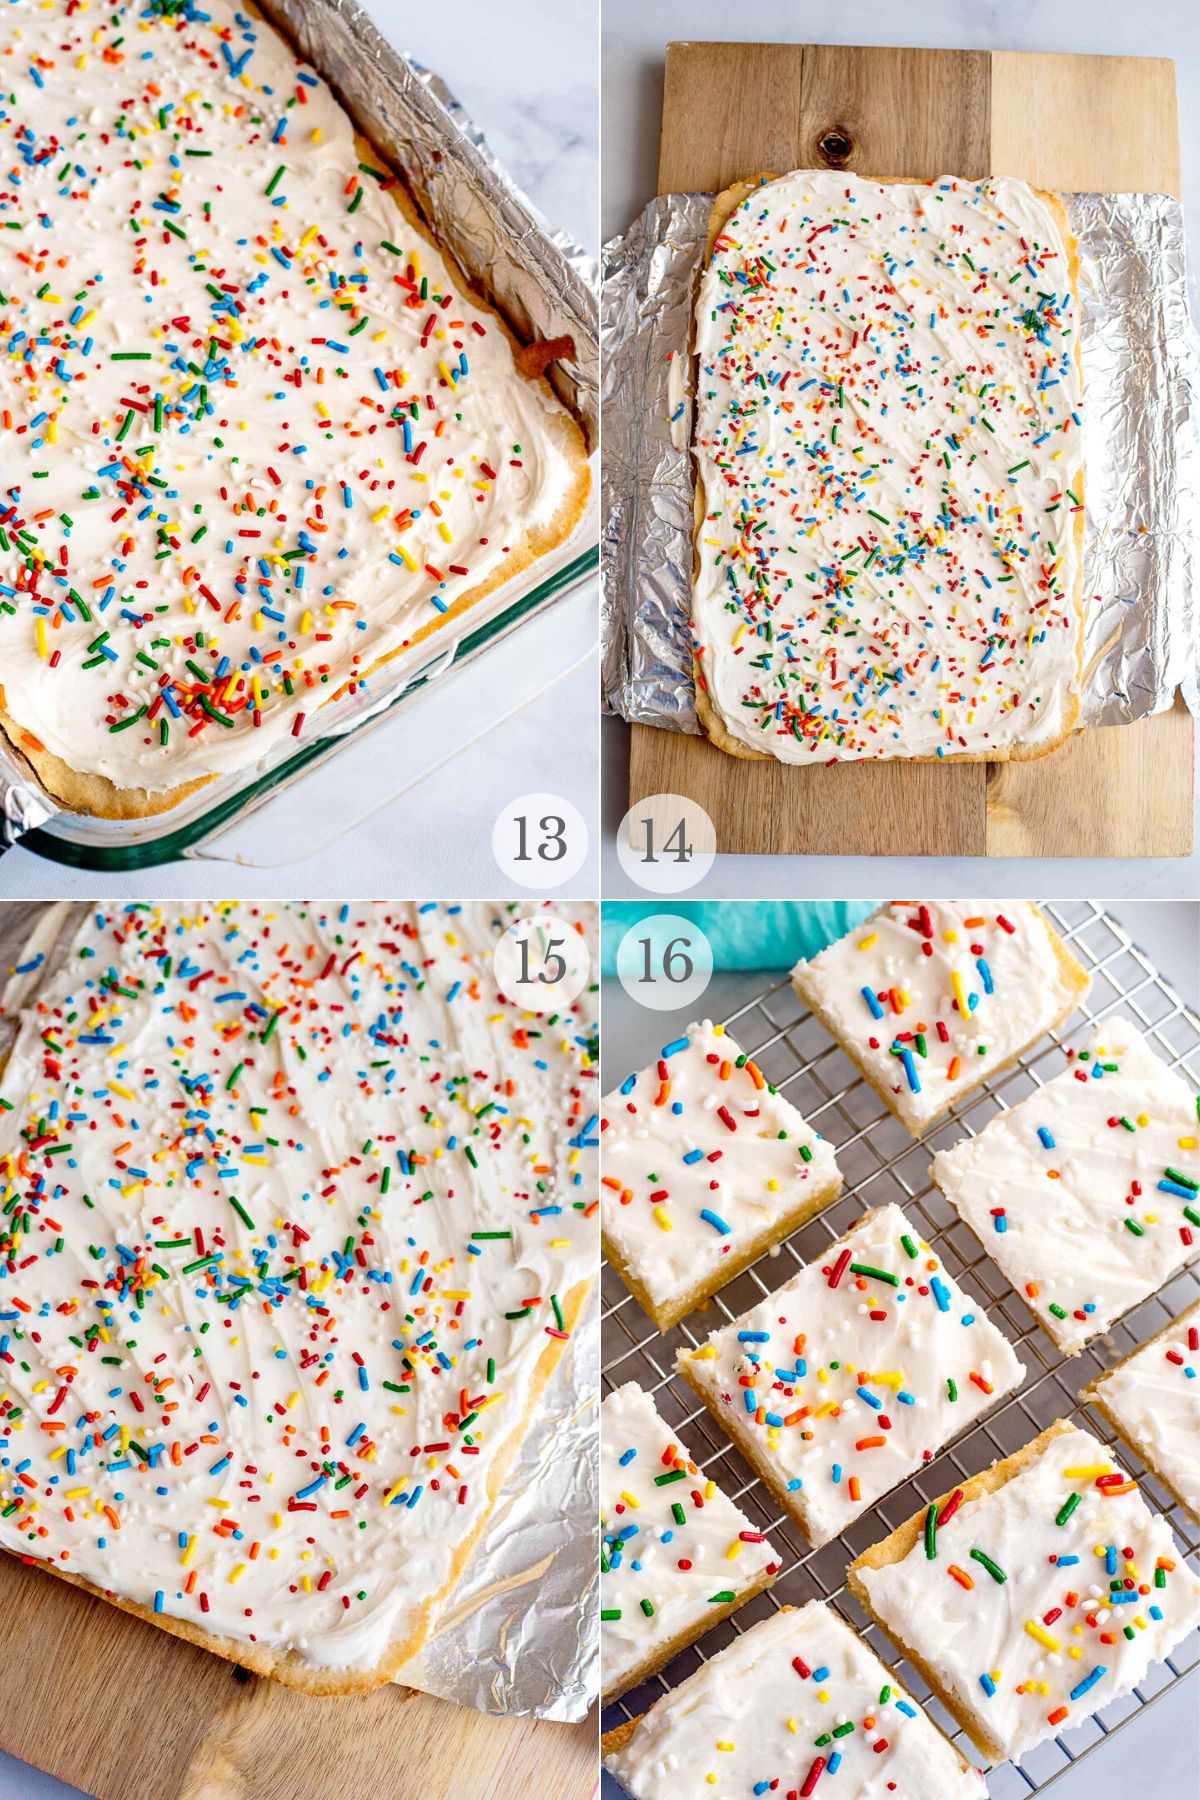 sugar cookie bars recipe steps 13-16.